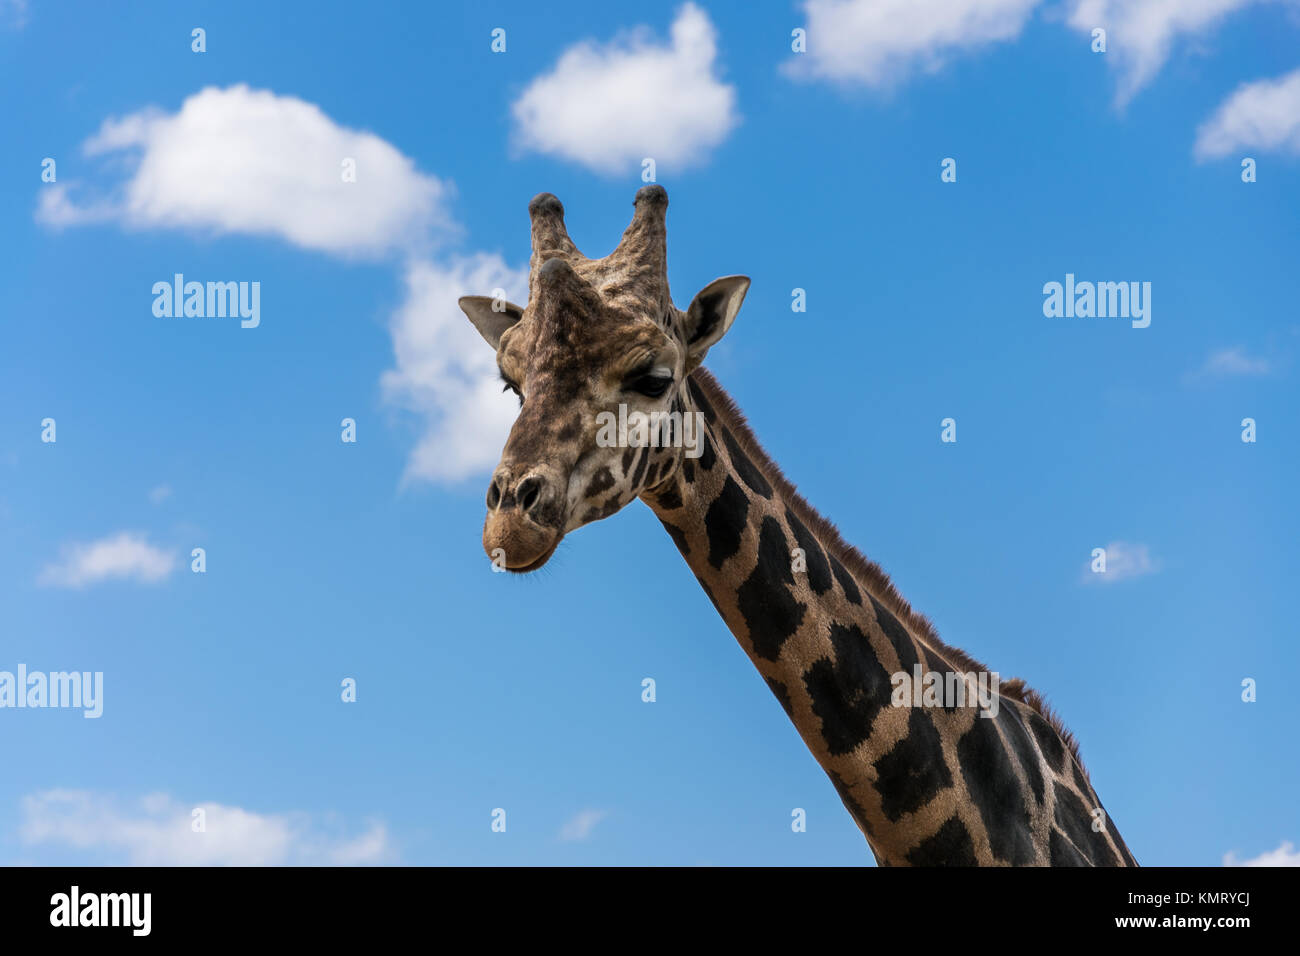 Giraffe portrait among the clouds Stock Photo